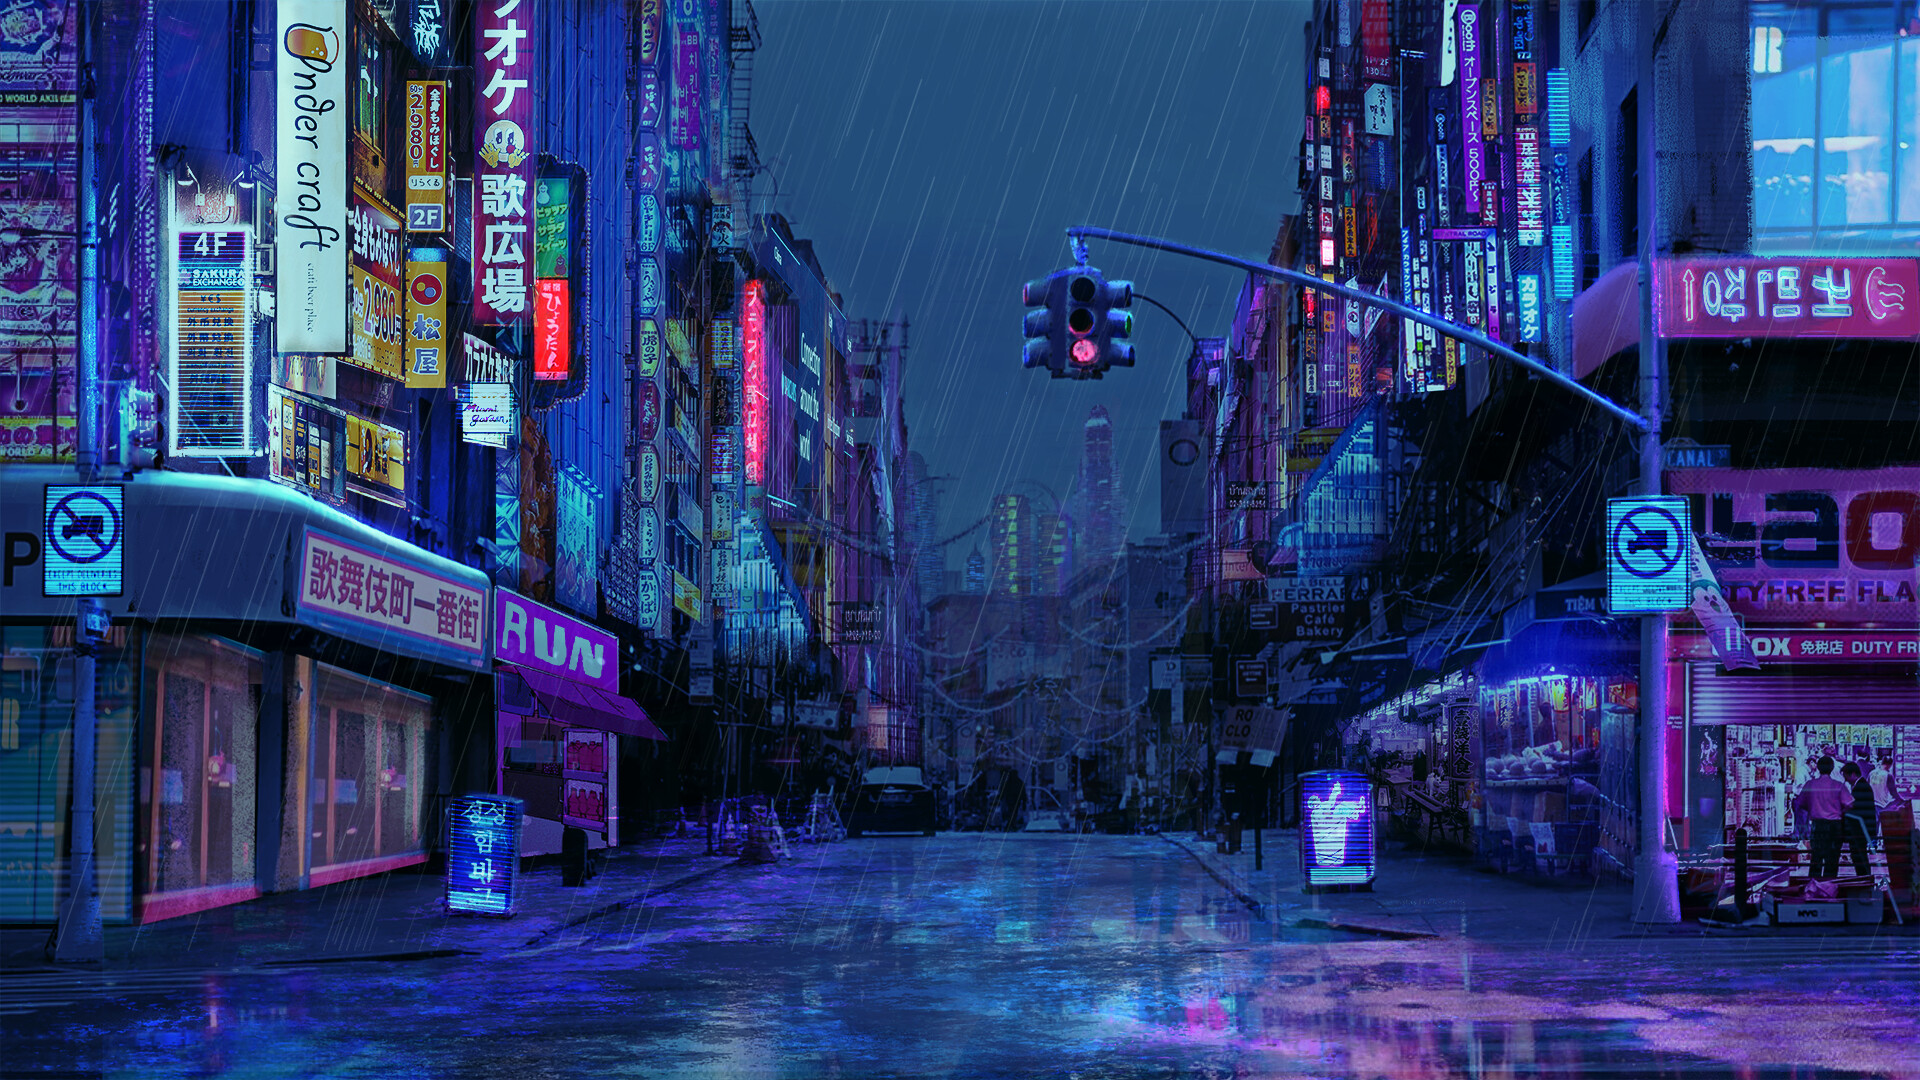 ArtStation - Rainy night